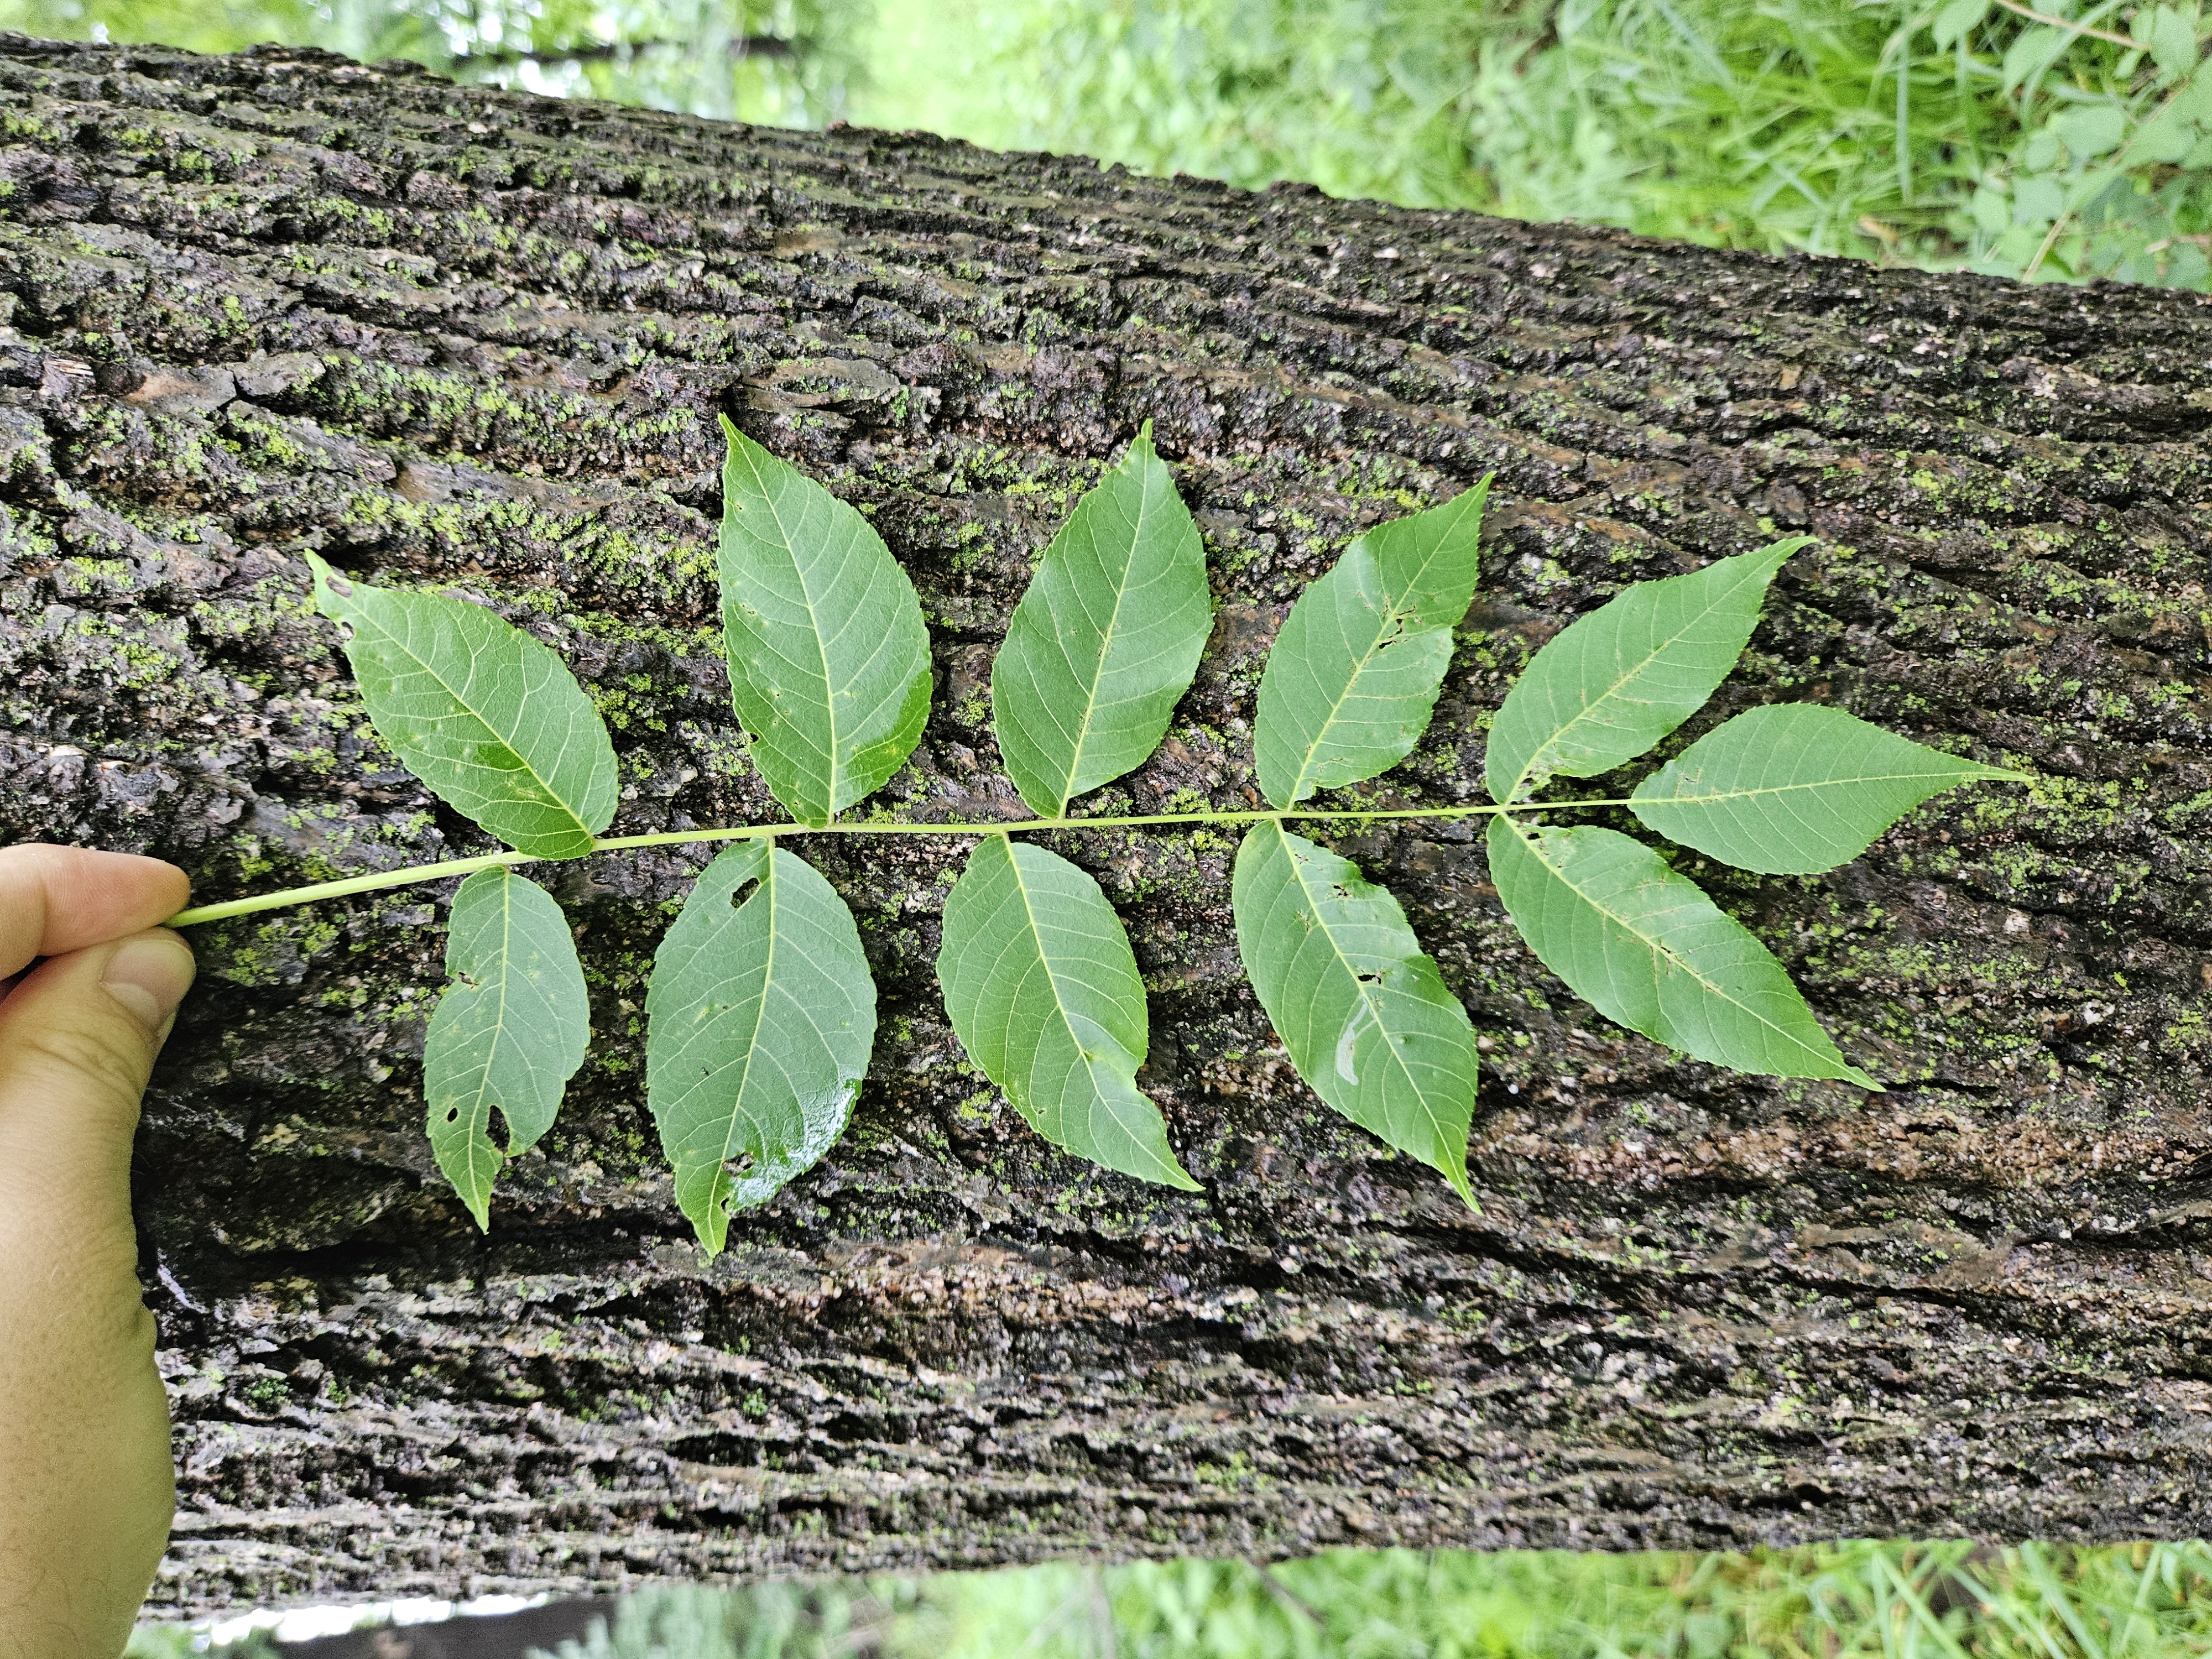 Black walnut leaf and bark of a mature tree.